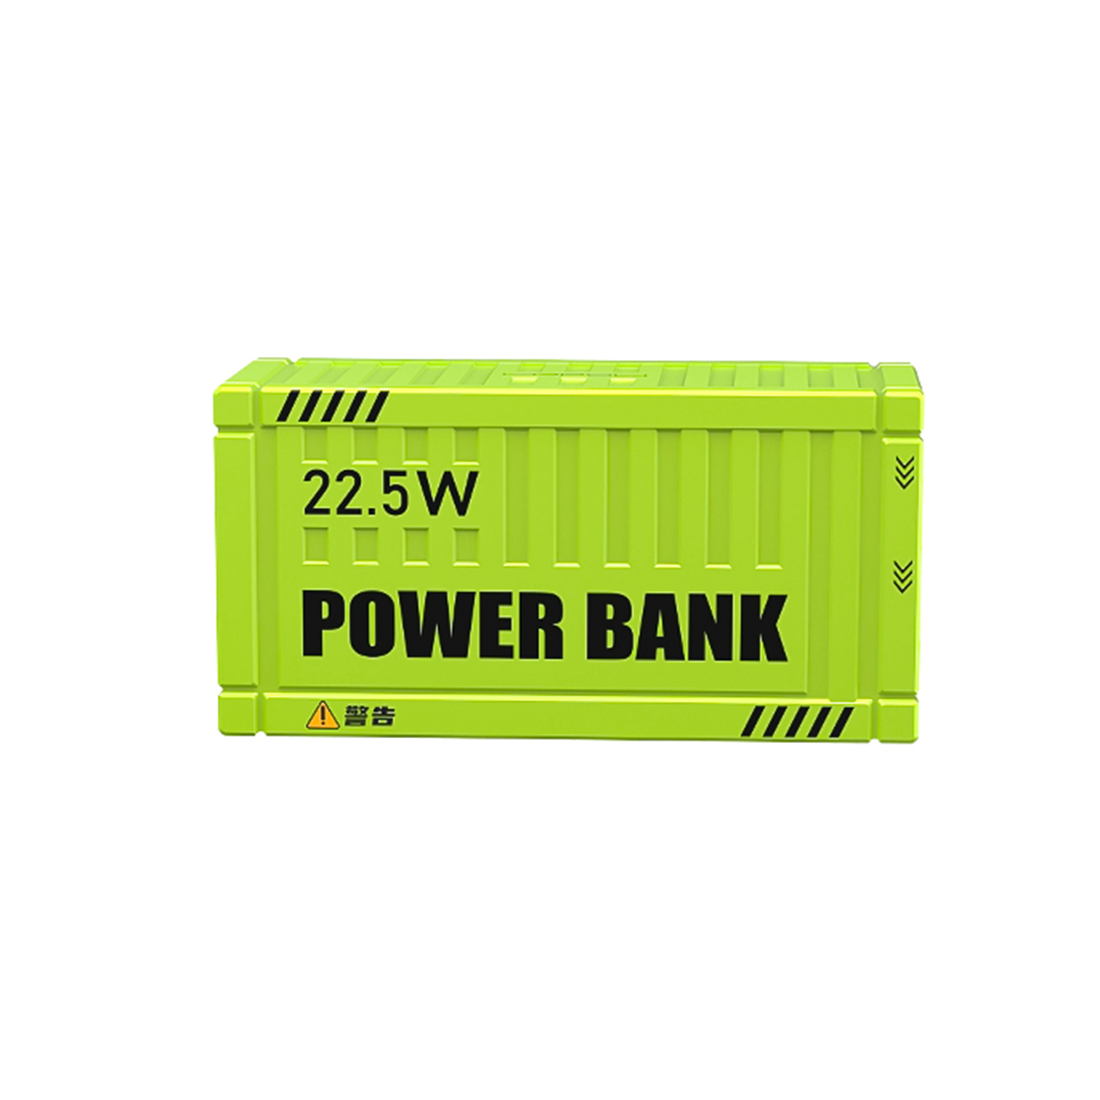 power bank 10000mah private label, power bank 10000mah factory direct sales, power bank 10000mah high quality, power bank 10000mah supply, power bank 10000mah custom made